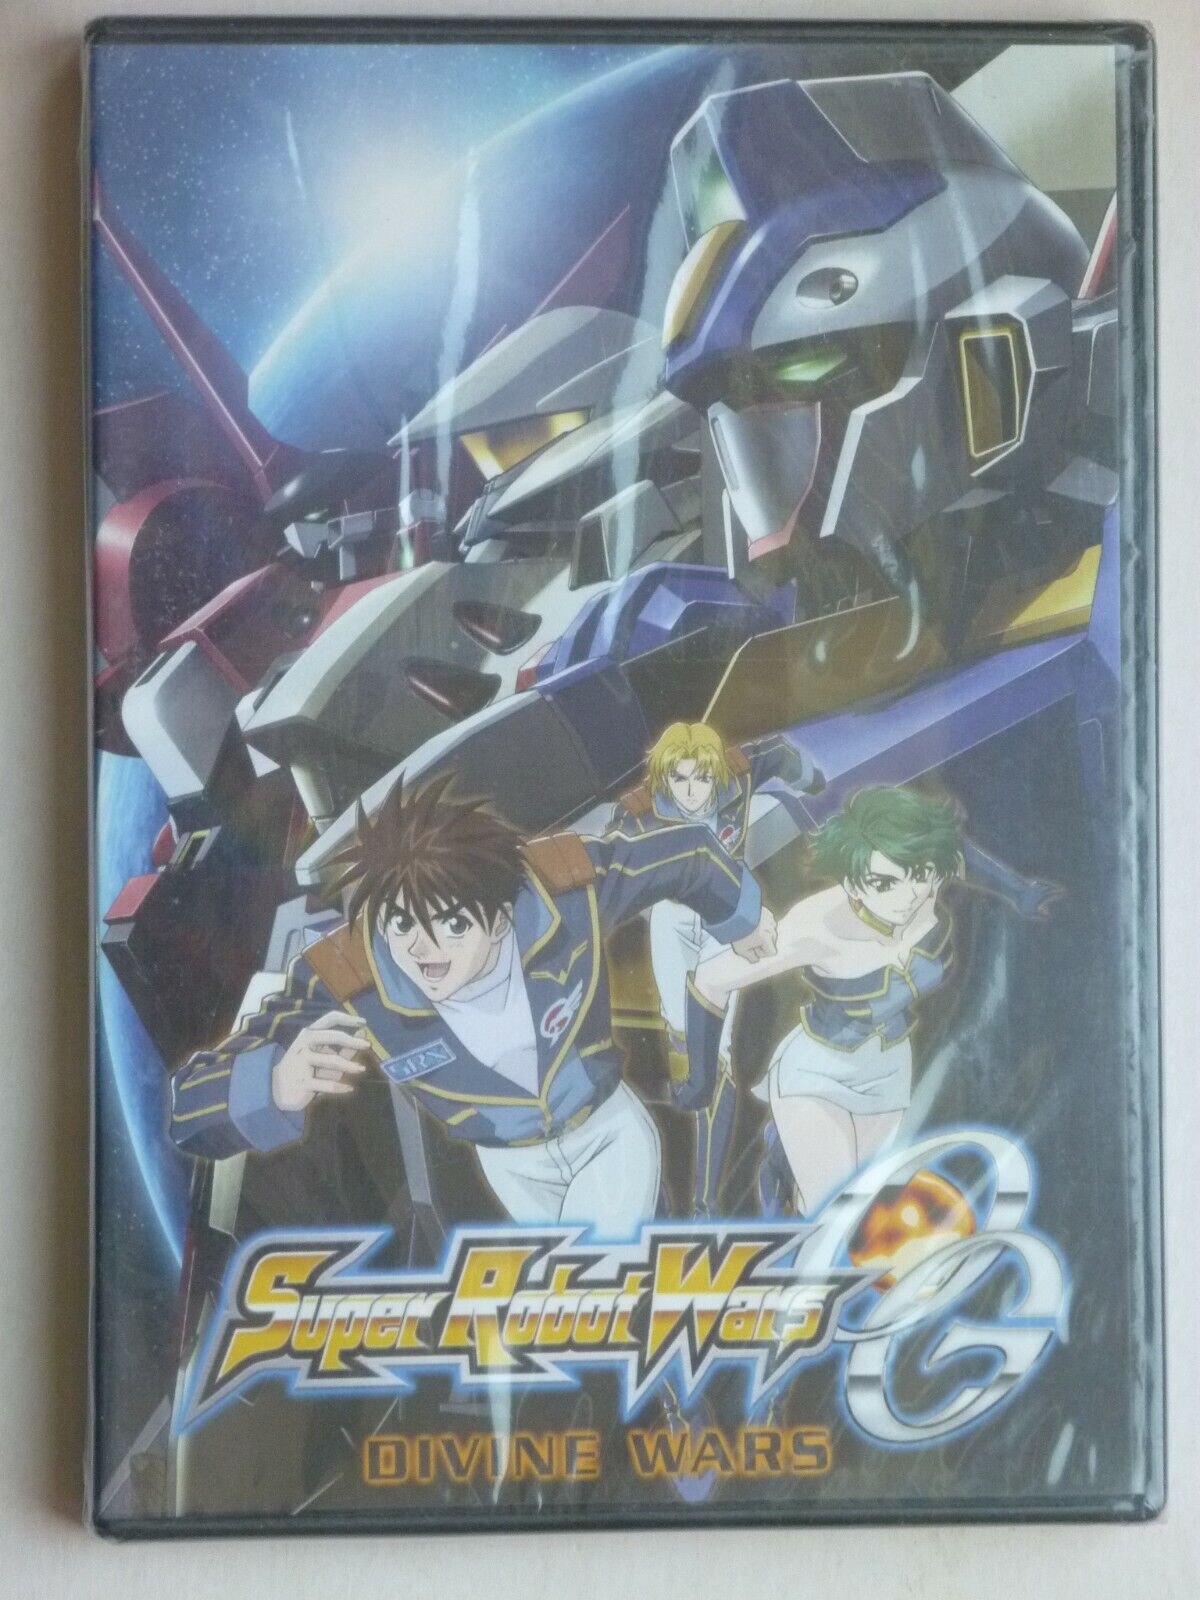 NEW Super Robot Wars Divine Wars 5-DVD Complete Anime Series Eps 1-26  AnimeWorks 631595130775 | eBay